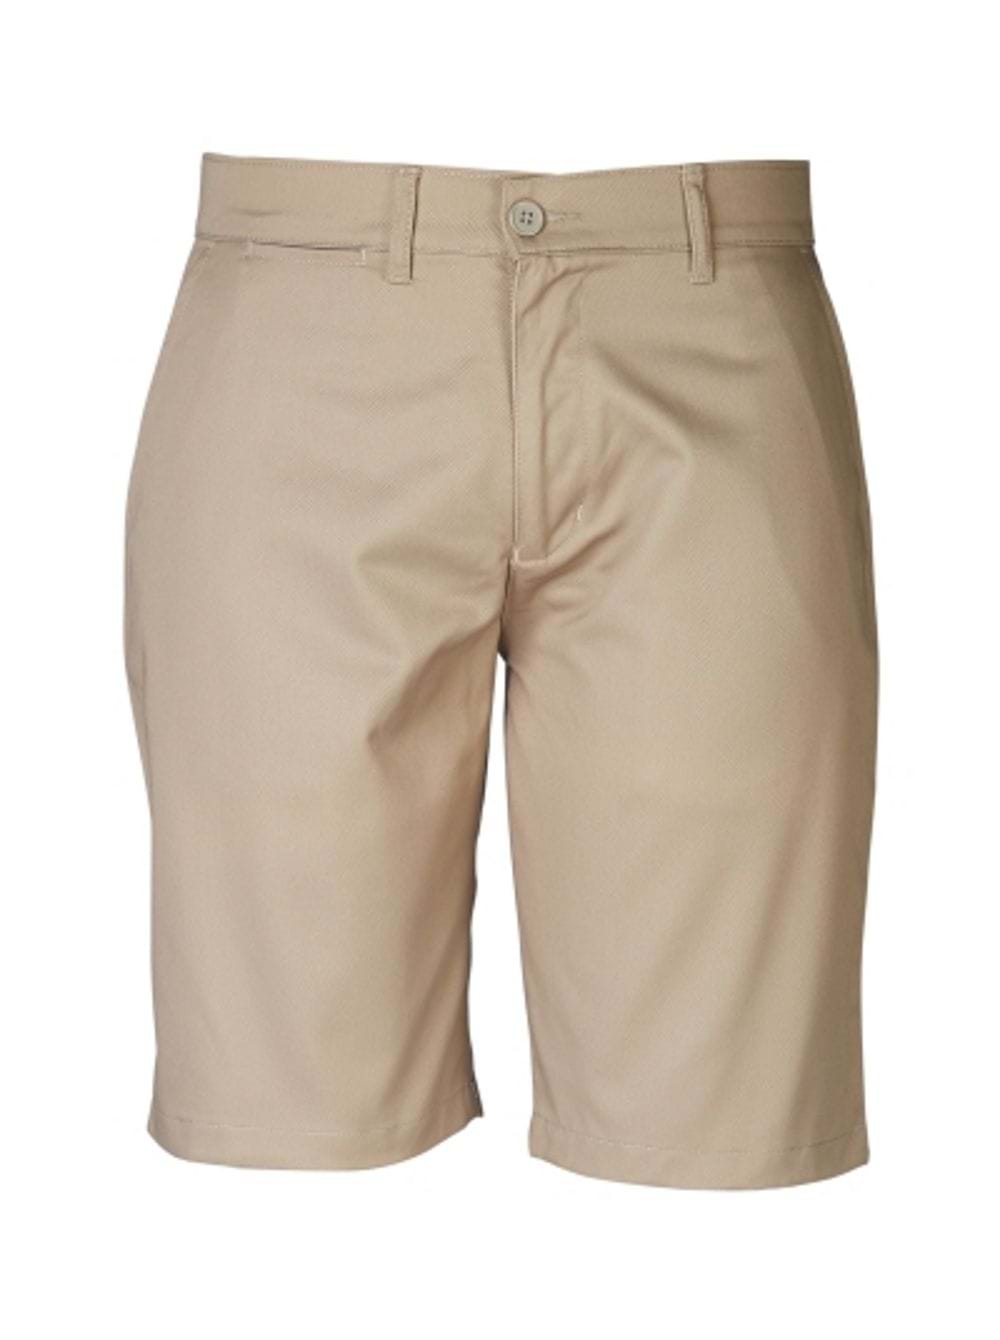 Westwood Bermuda Chino Shorts - Khaki Green / 42